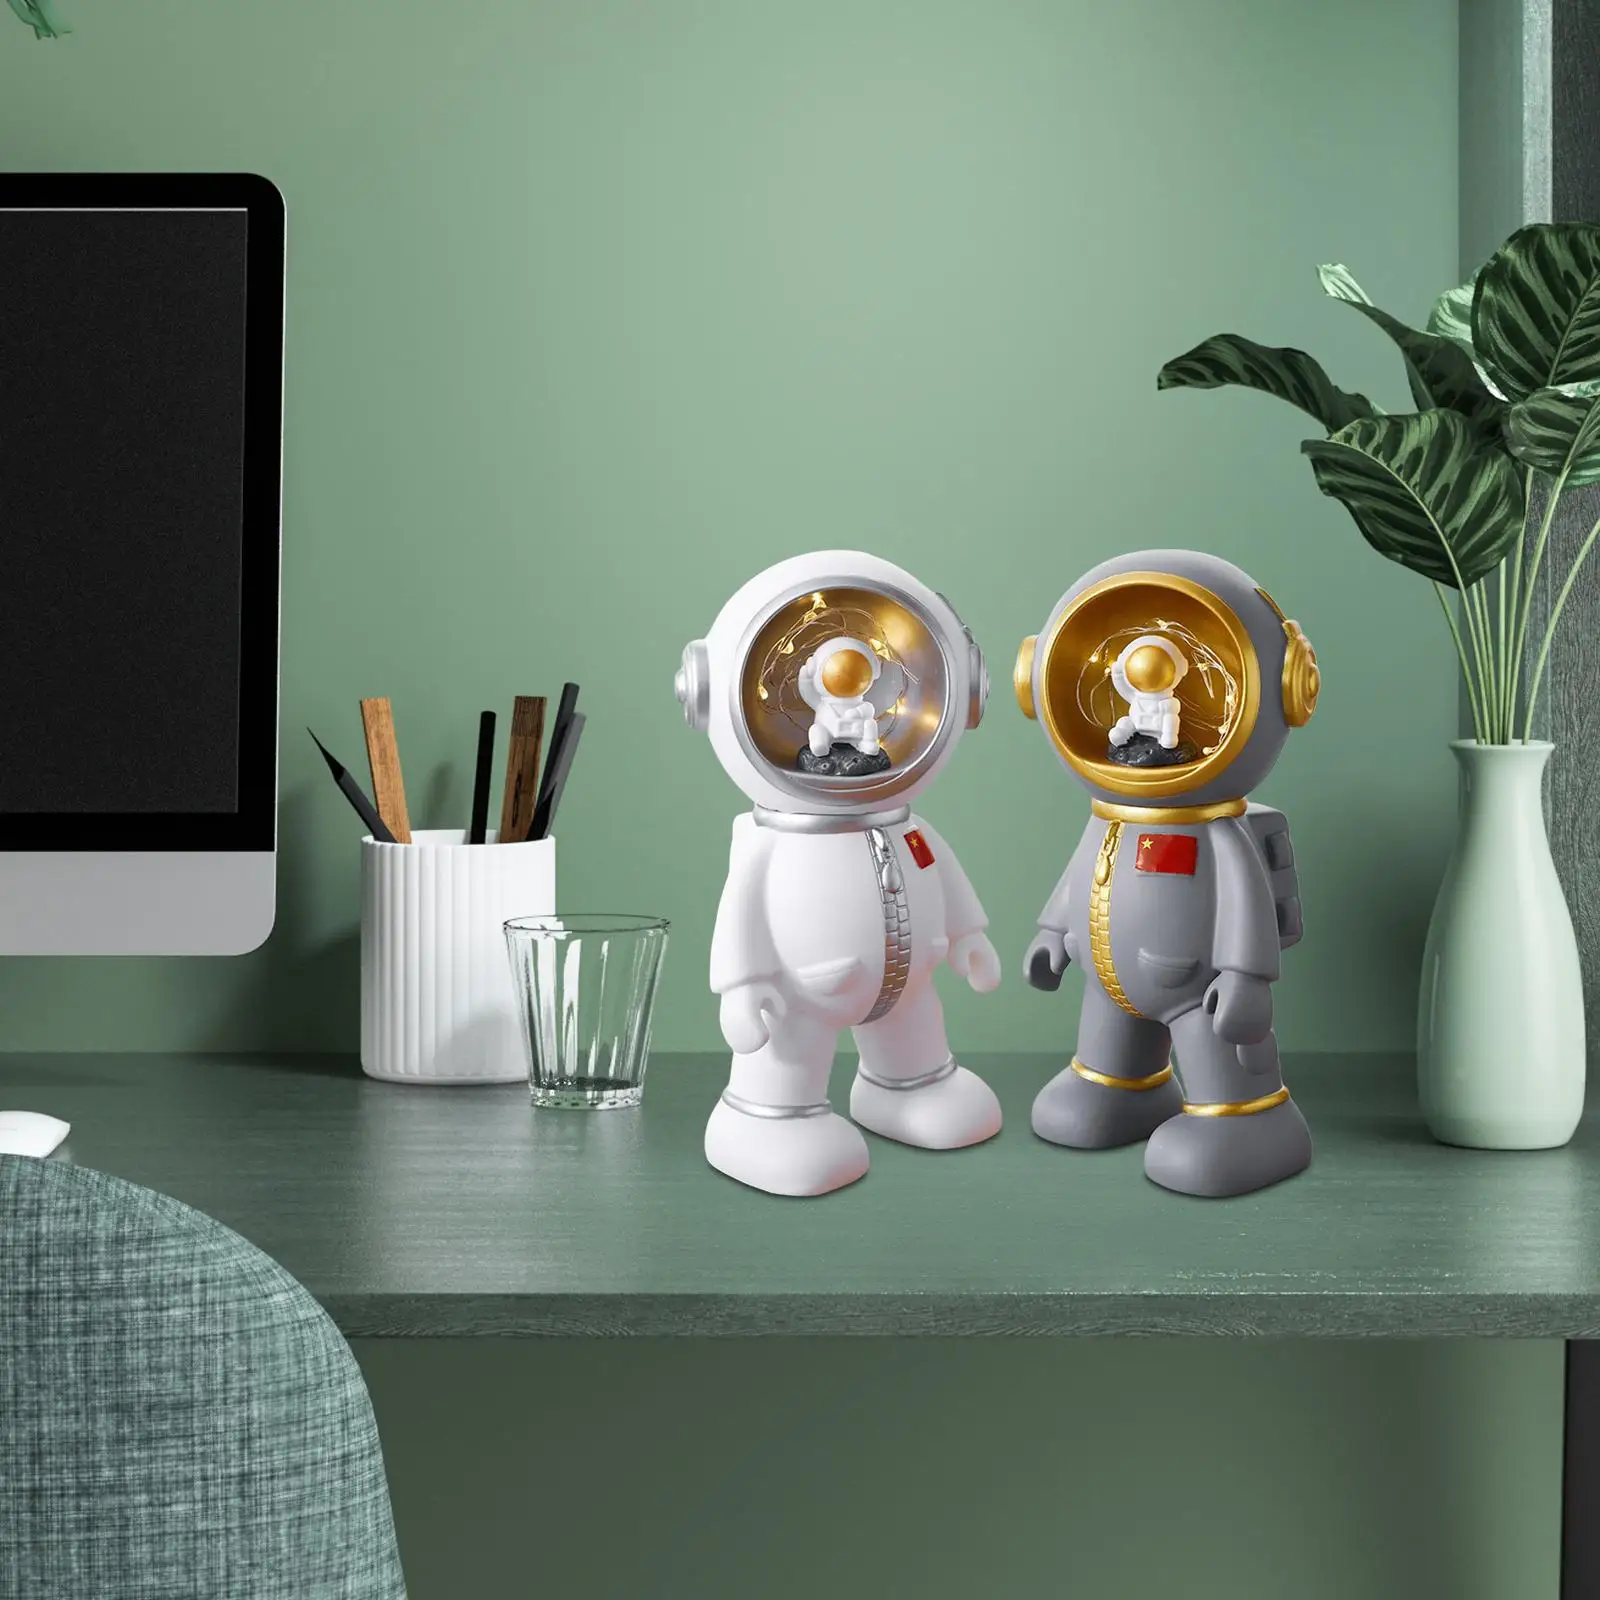 Portable Astronaut Piggy Bank Decorative Ornament Crafts Savings Bank Storage Creative Money Box for Gifts Desktop Birthday